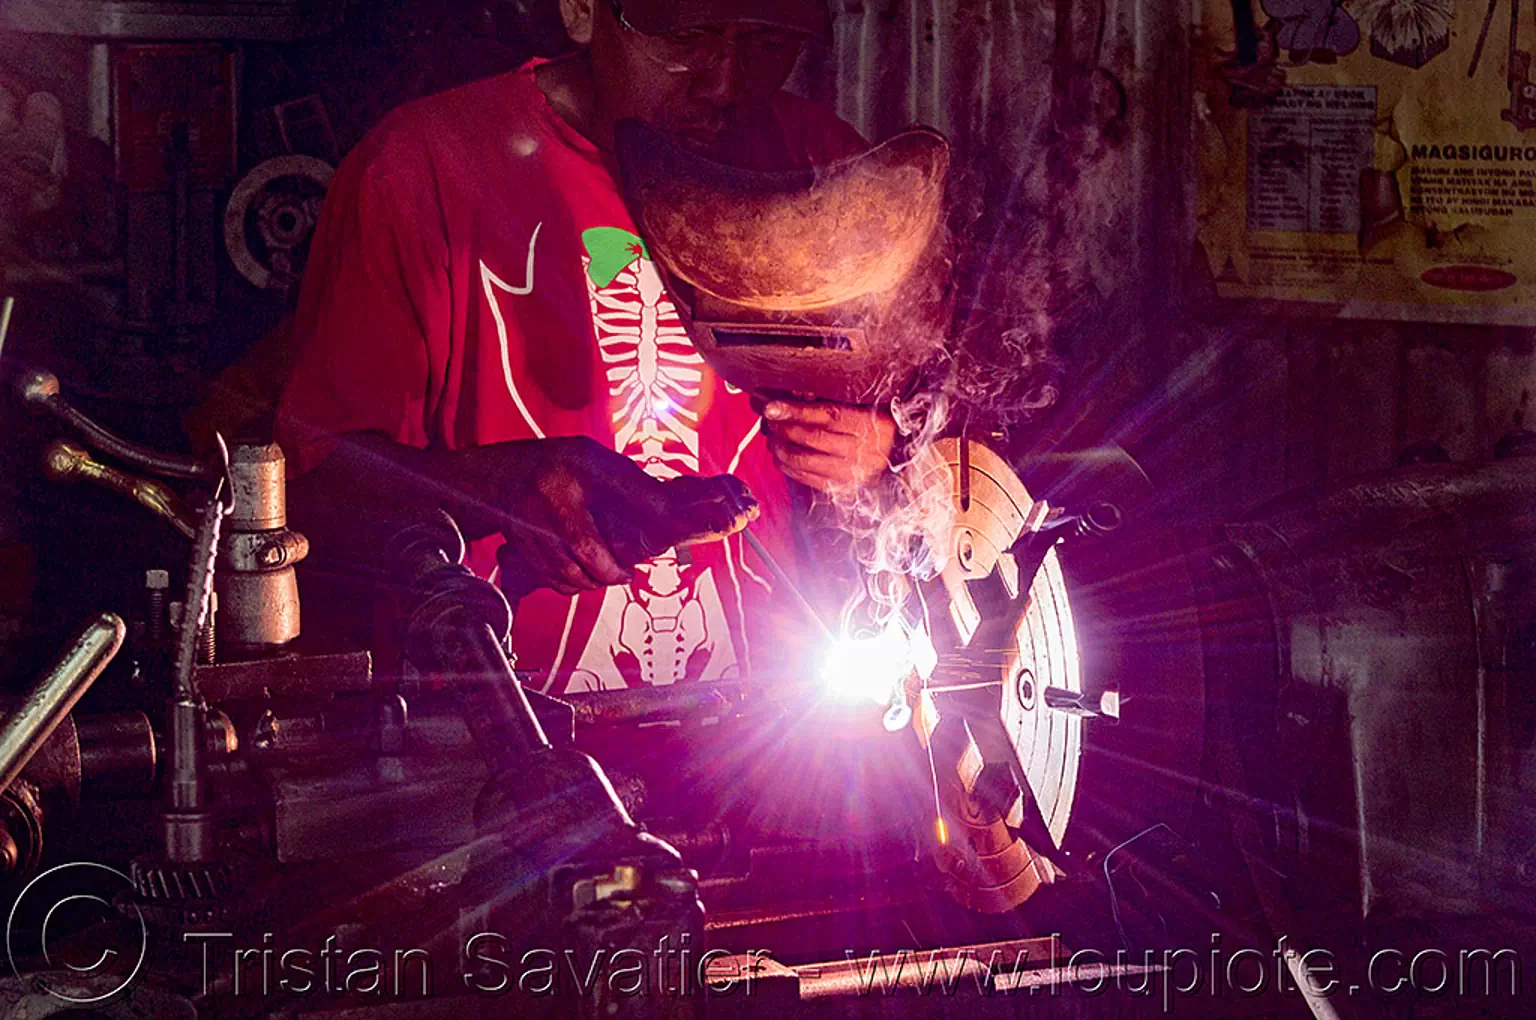 arc welding on lathe in metal workshop (philippines), arc welding, baguio, machine shop, machine tool, man, mechanical workshop, metal lathe, operator, philippines, welder, worker, working